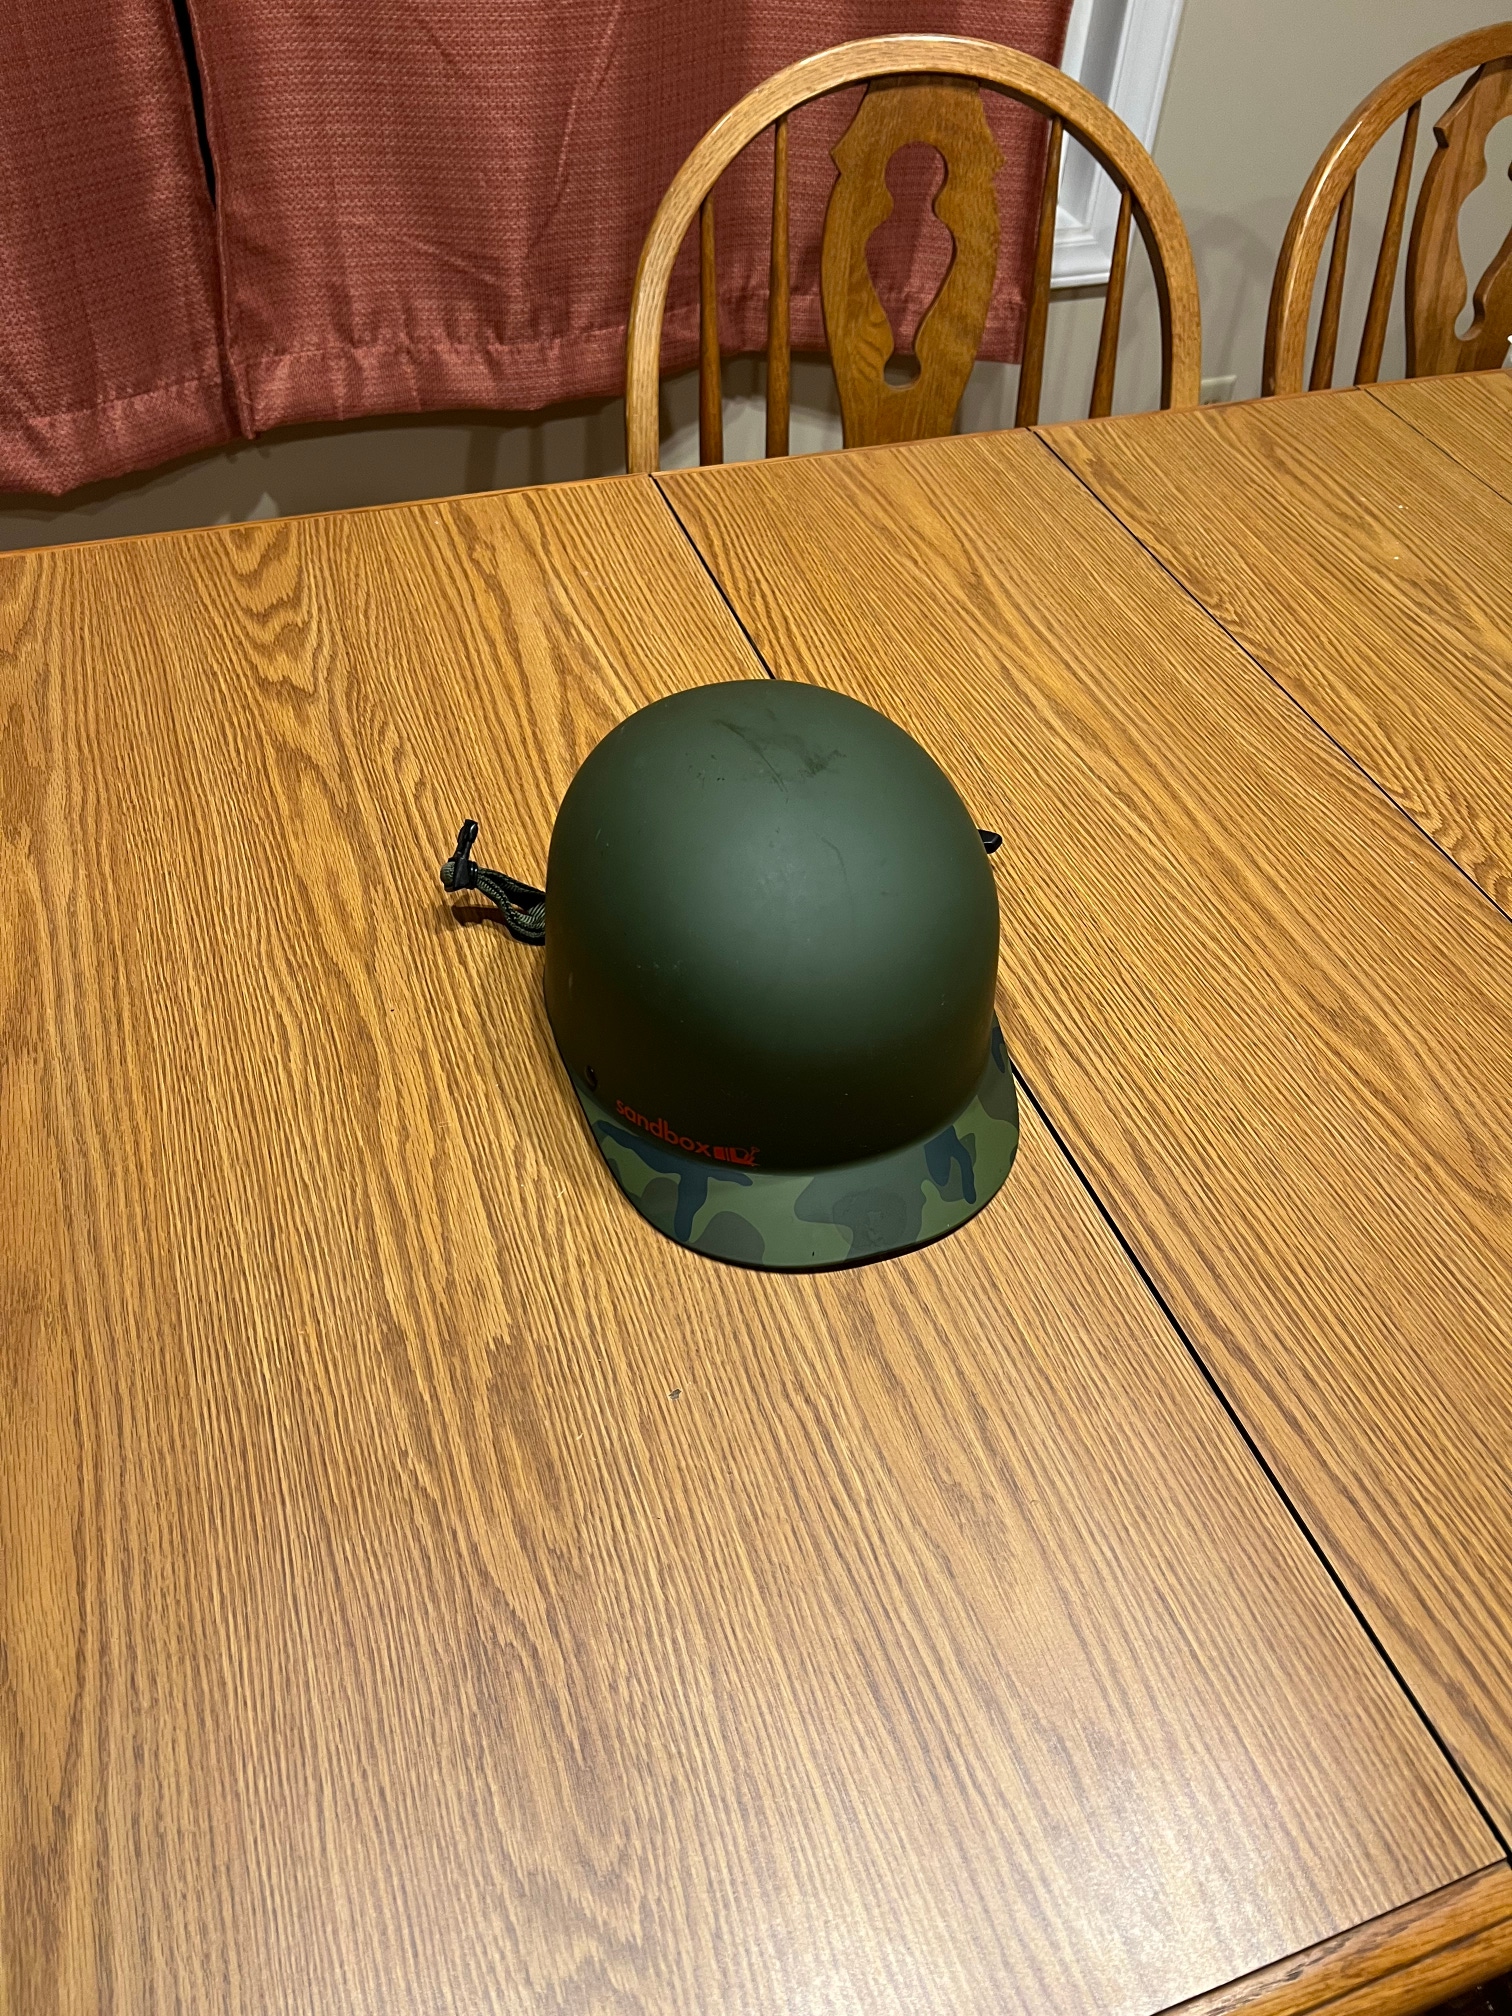 Sandbox Army Green Helmet